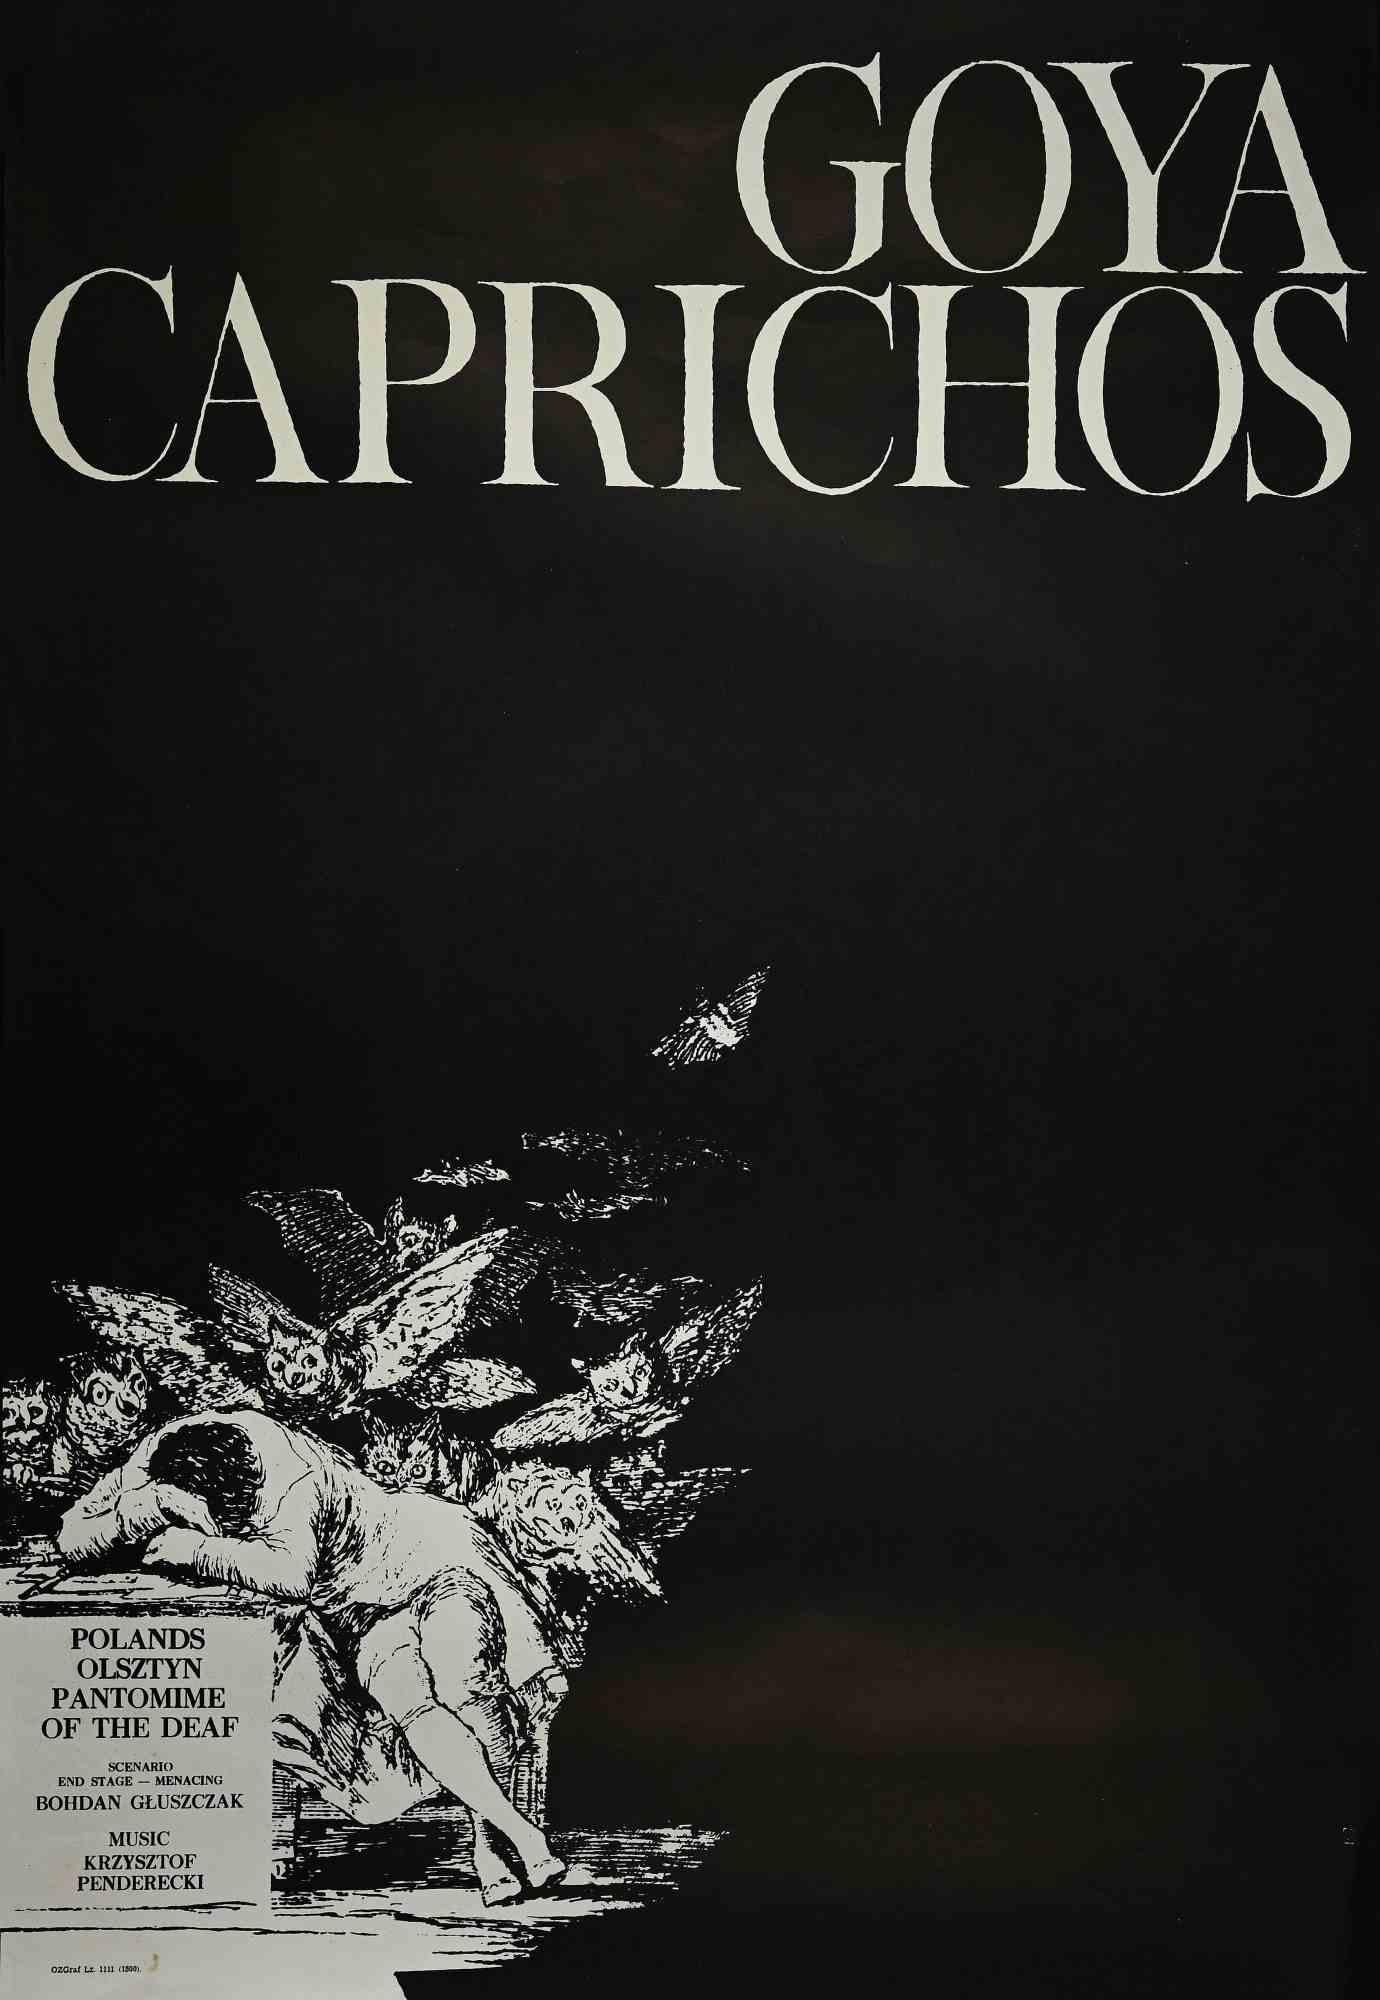 Unknown Figurative Print - Goya Caprichos Poster - Vintage Offset Print - 1975